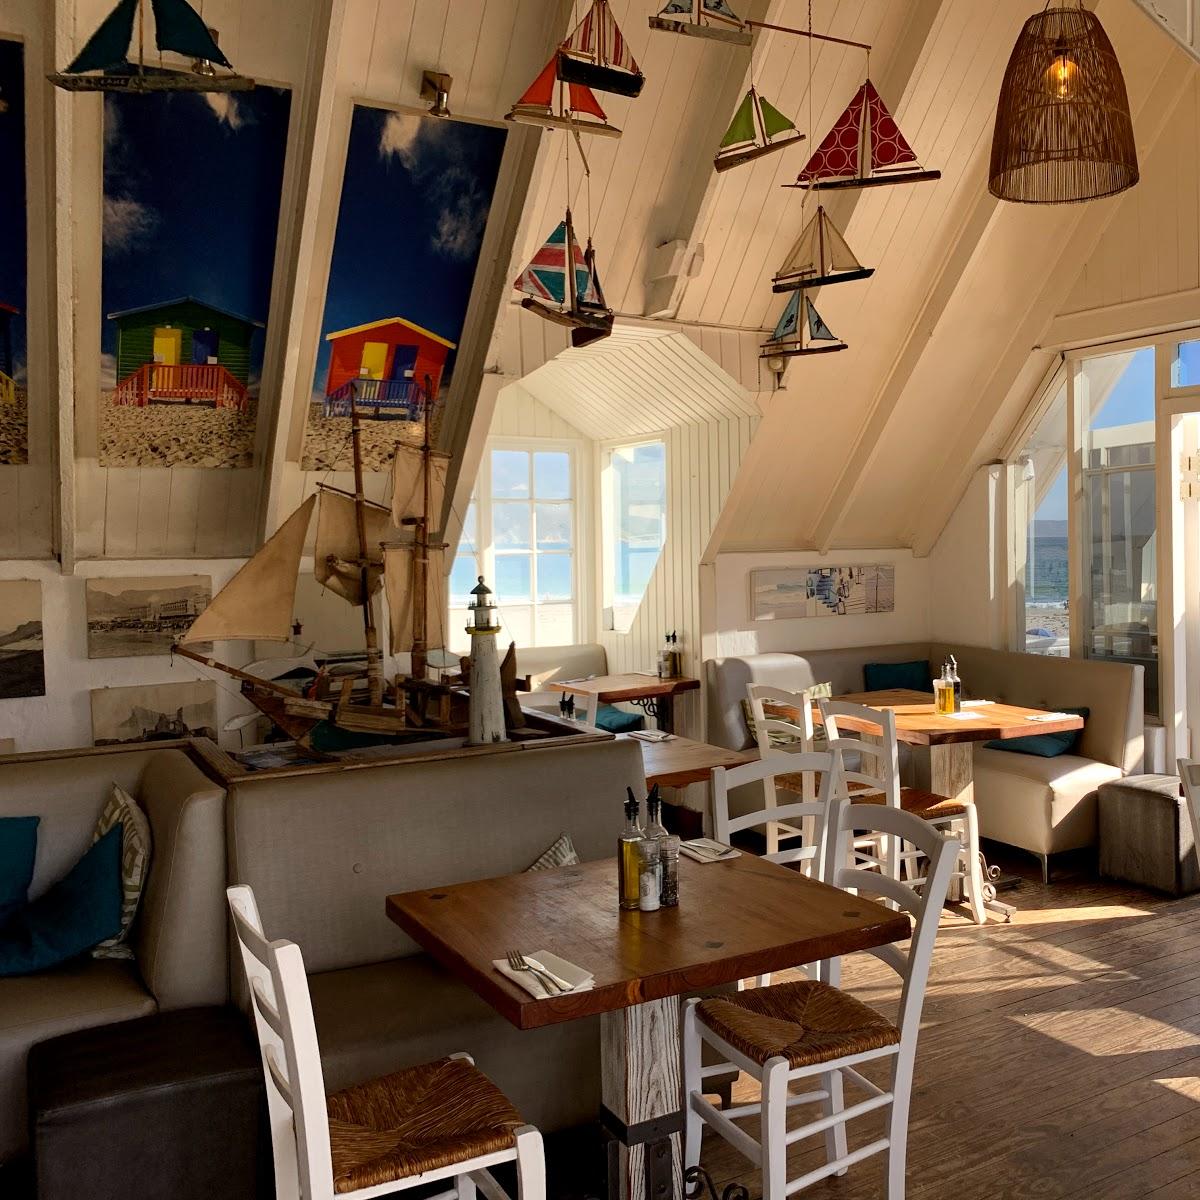 Restaurant "Dunes Beach Restaurant & Bar" in Cape Town